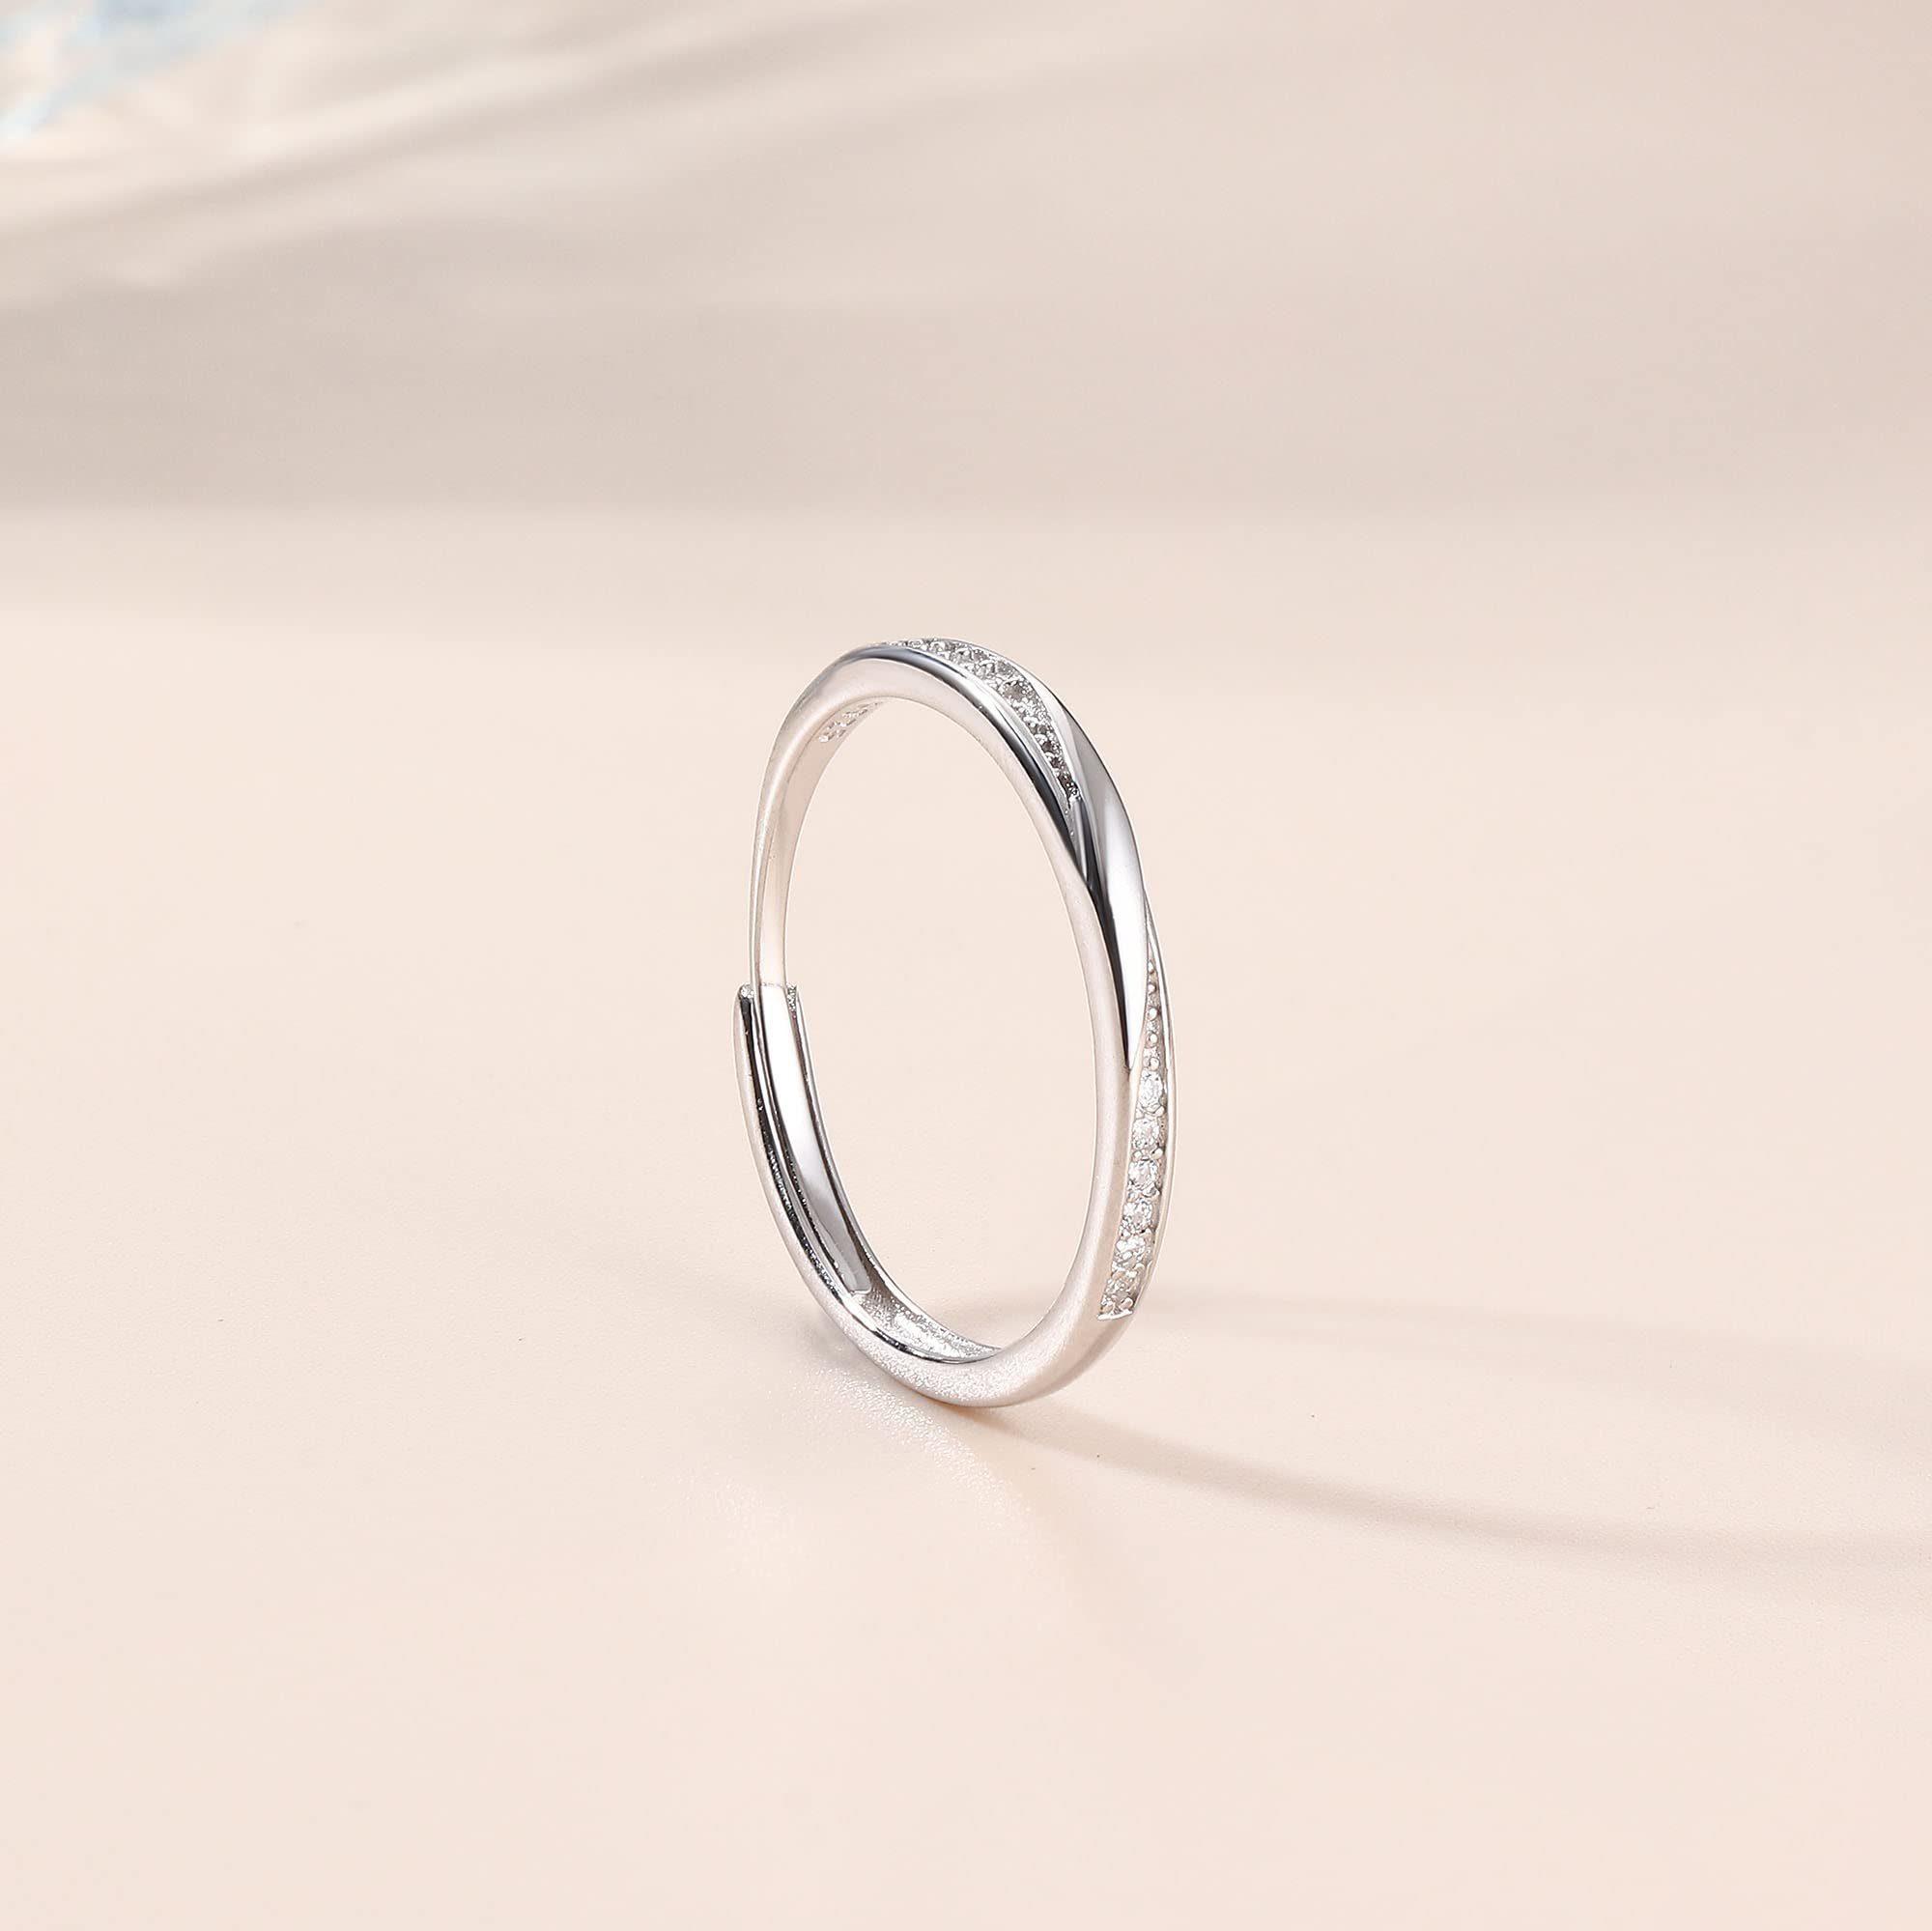 Frauen Mode Ring, POCHUMIDUU für Damen Verstellbarer Silber Fingerring aus Silberschmuck Sterlingsilber 925er Trend 925